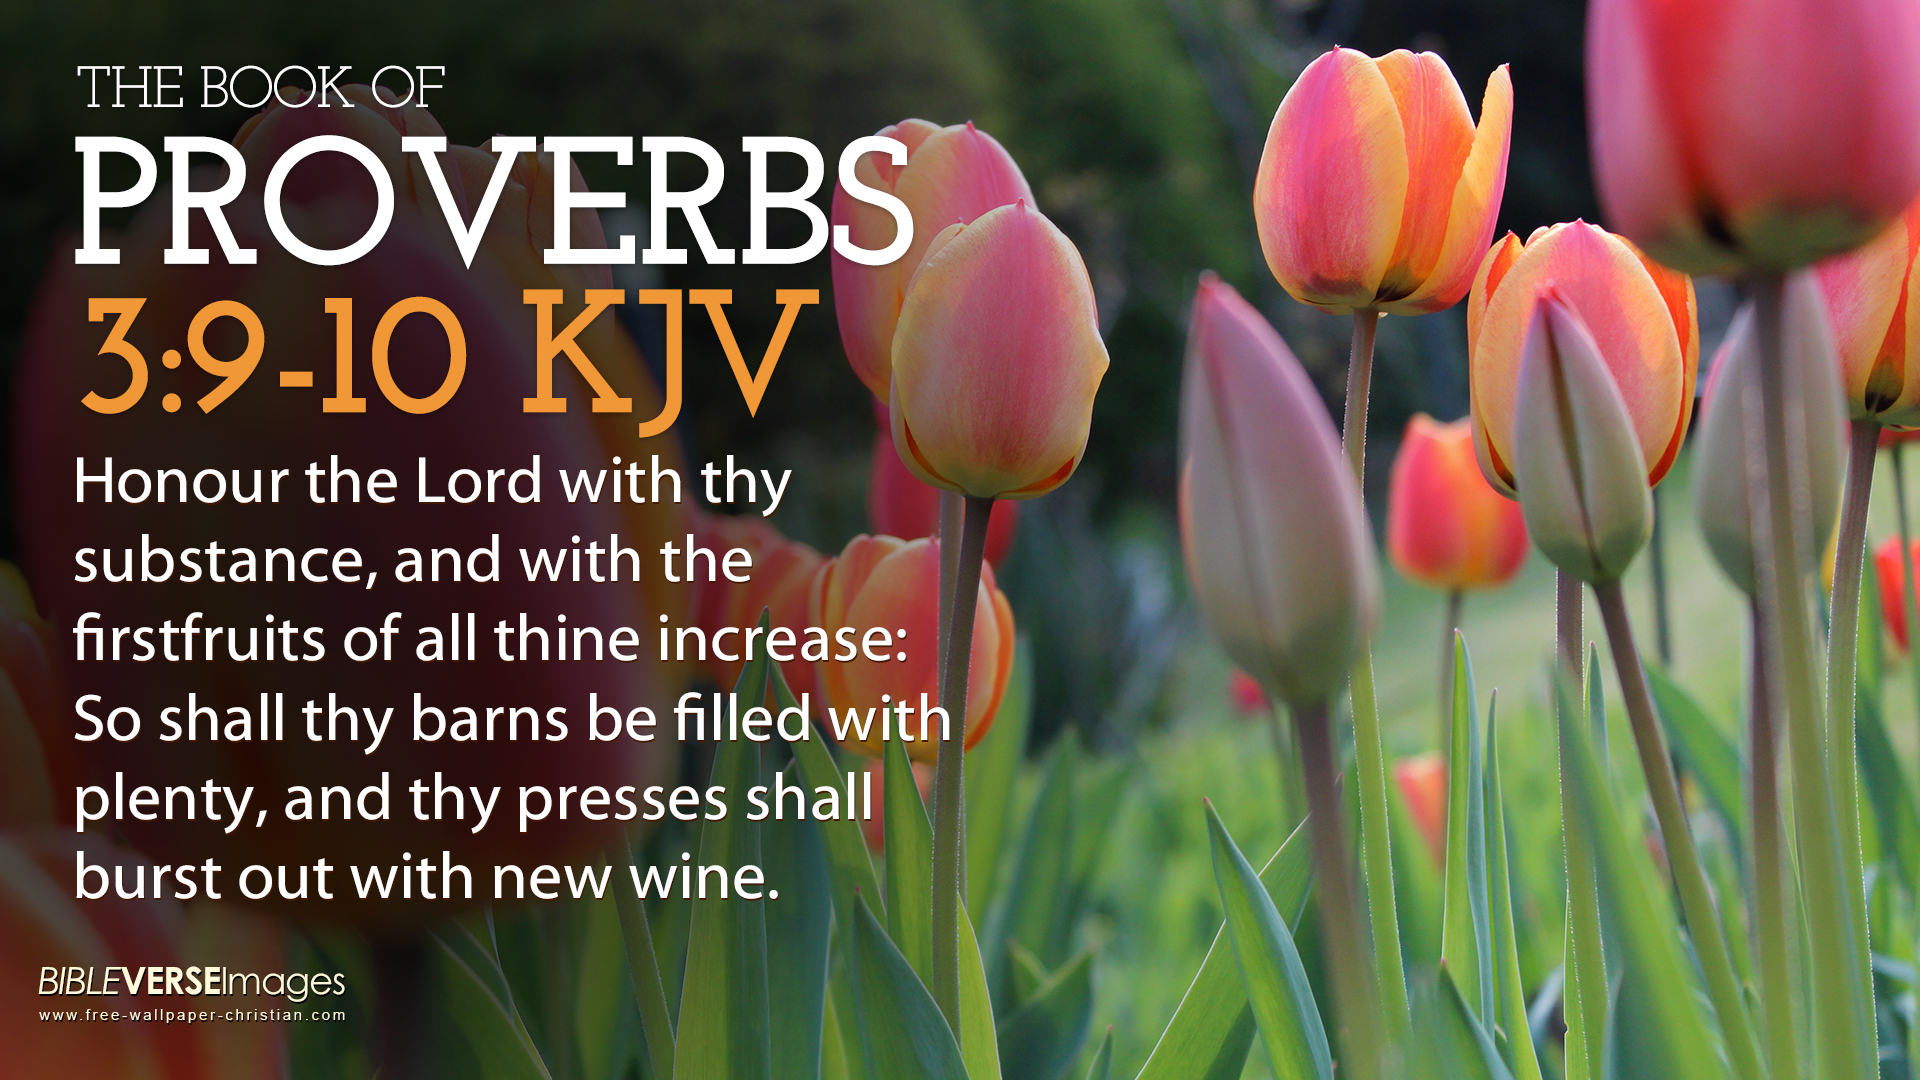 Bible-Verse-Wallpaper-proverbs-3-9-10-King-James-Version